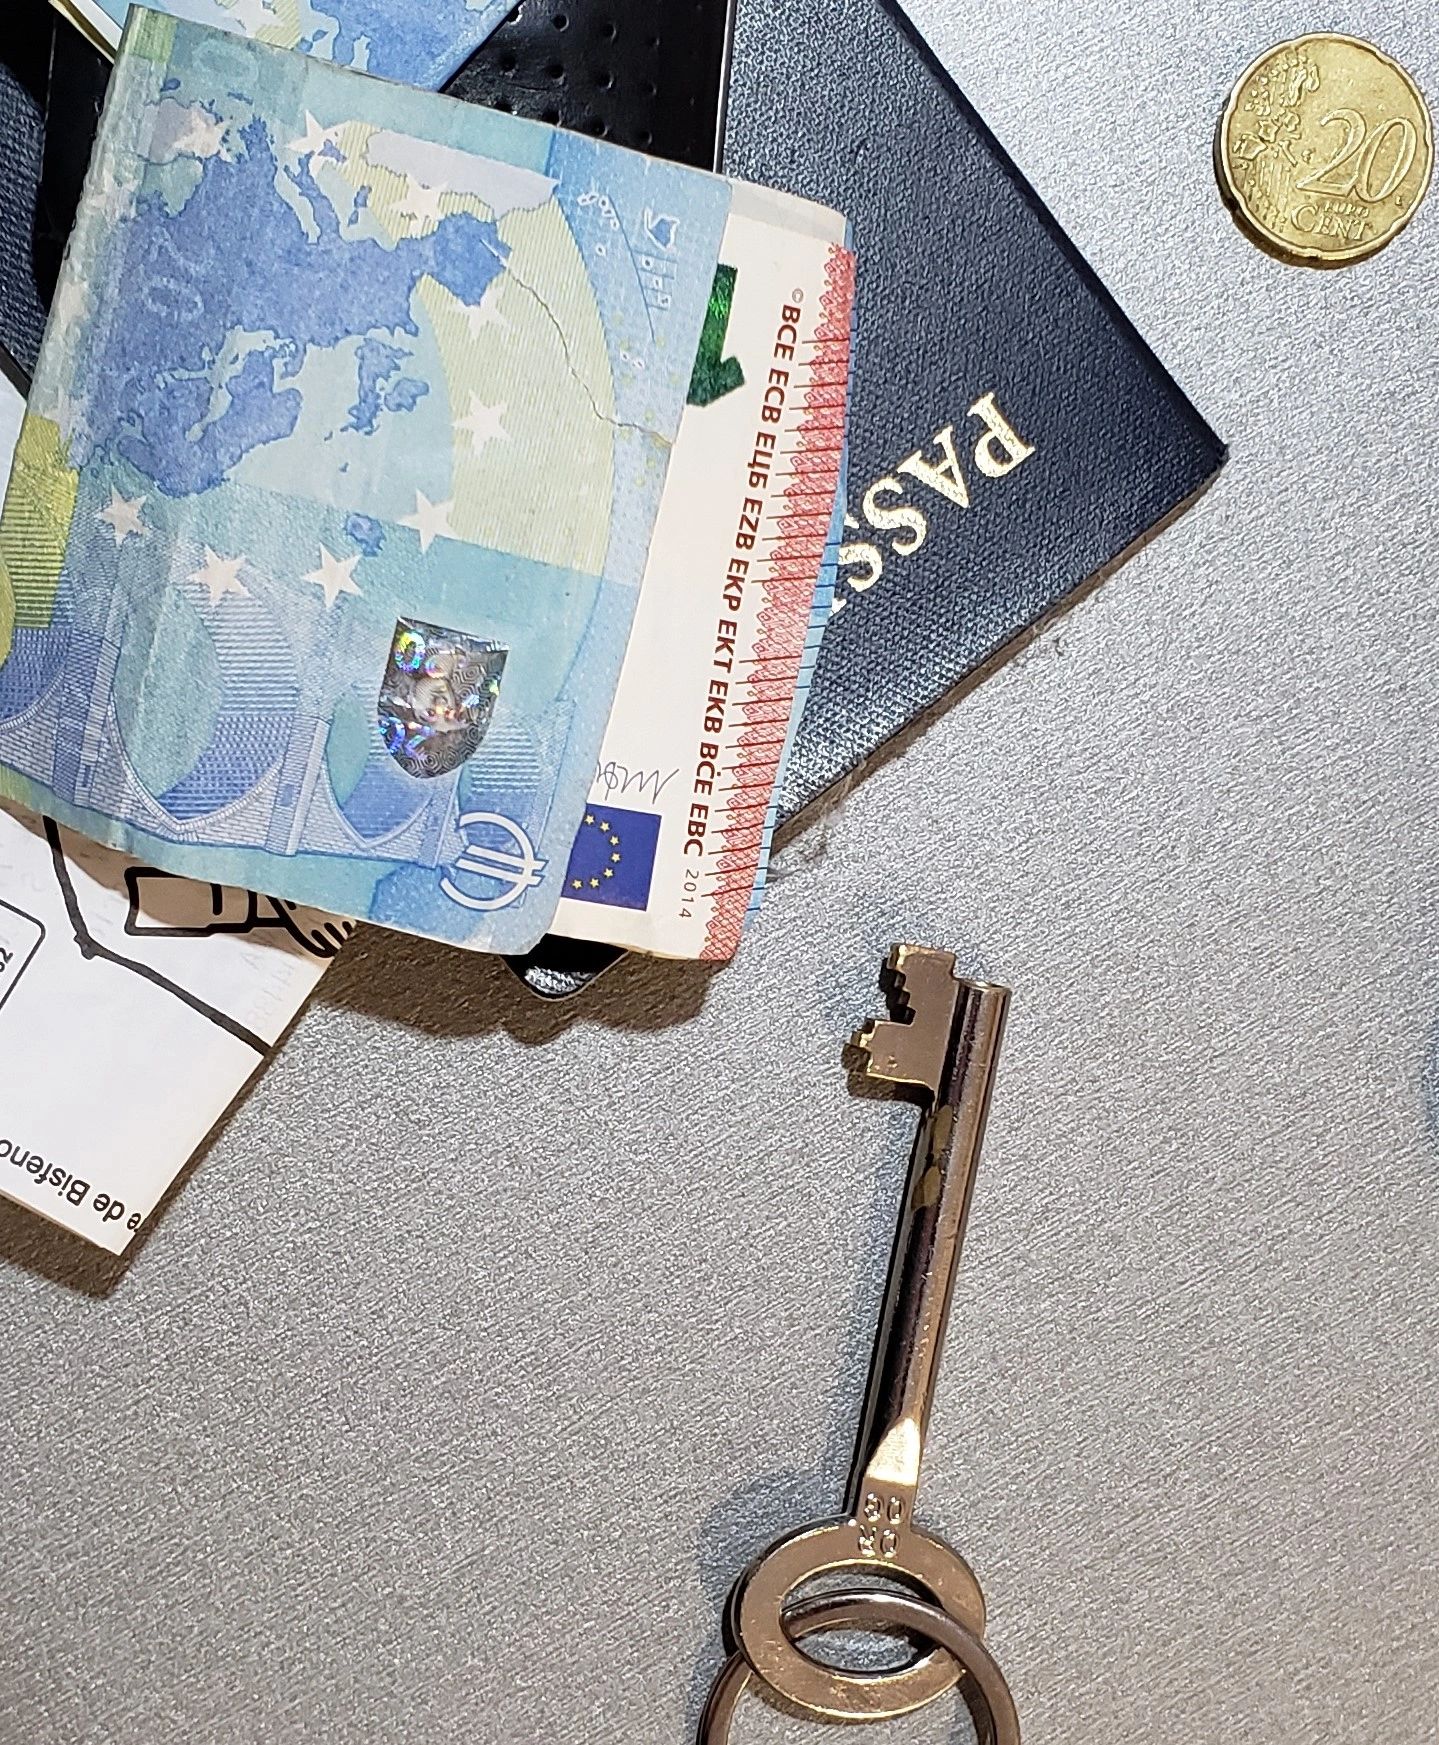 Passport, Euros, Barcelona Airbnb